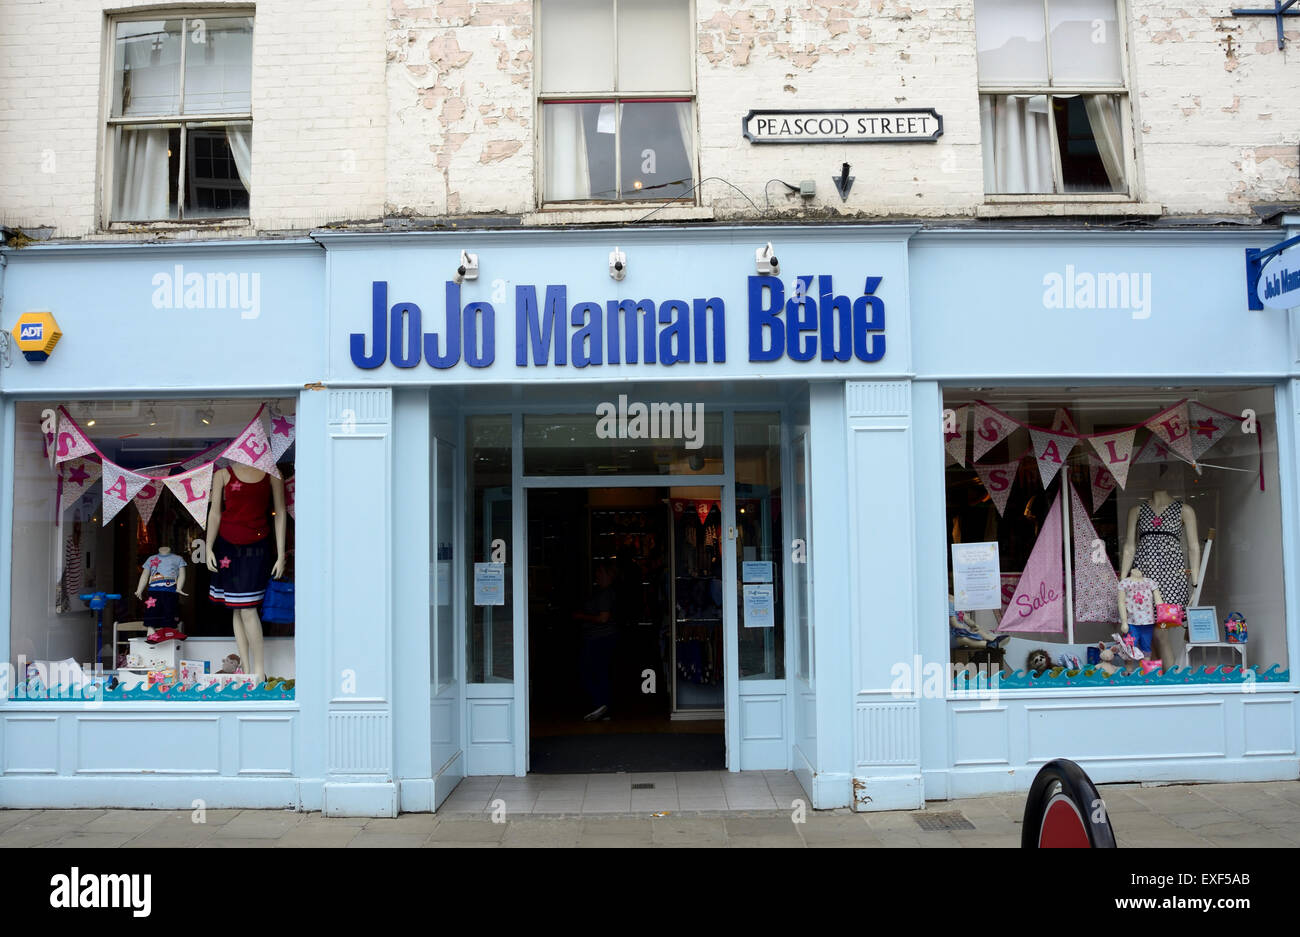 Jojo maman bebe windsor hi-res stock photography and images - Alamy